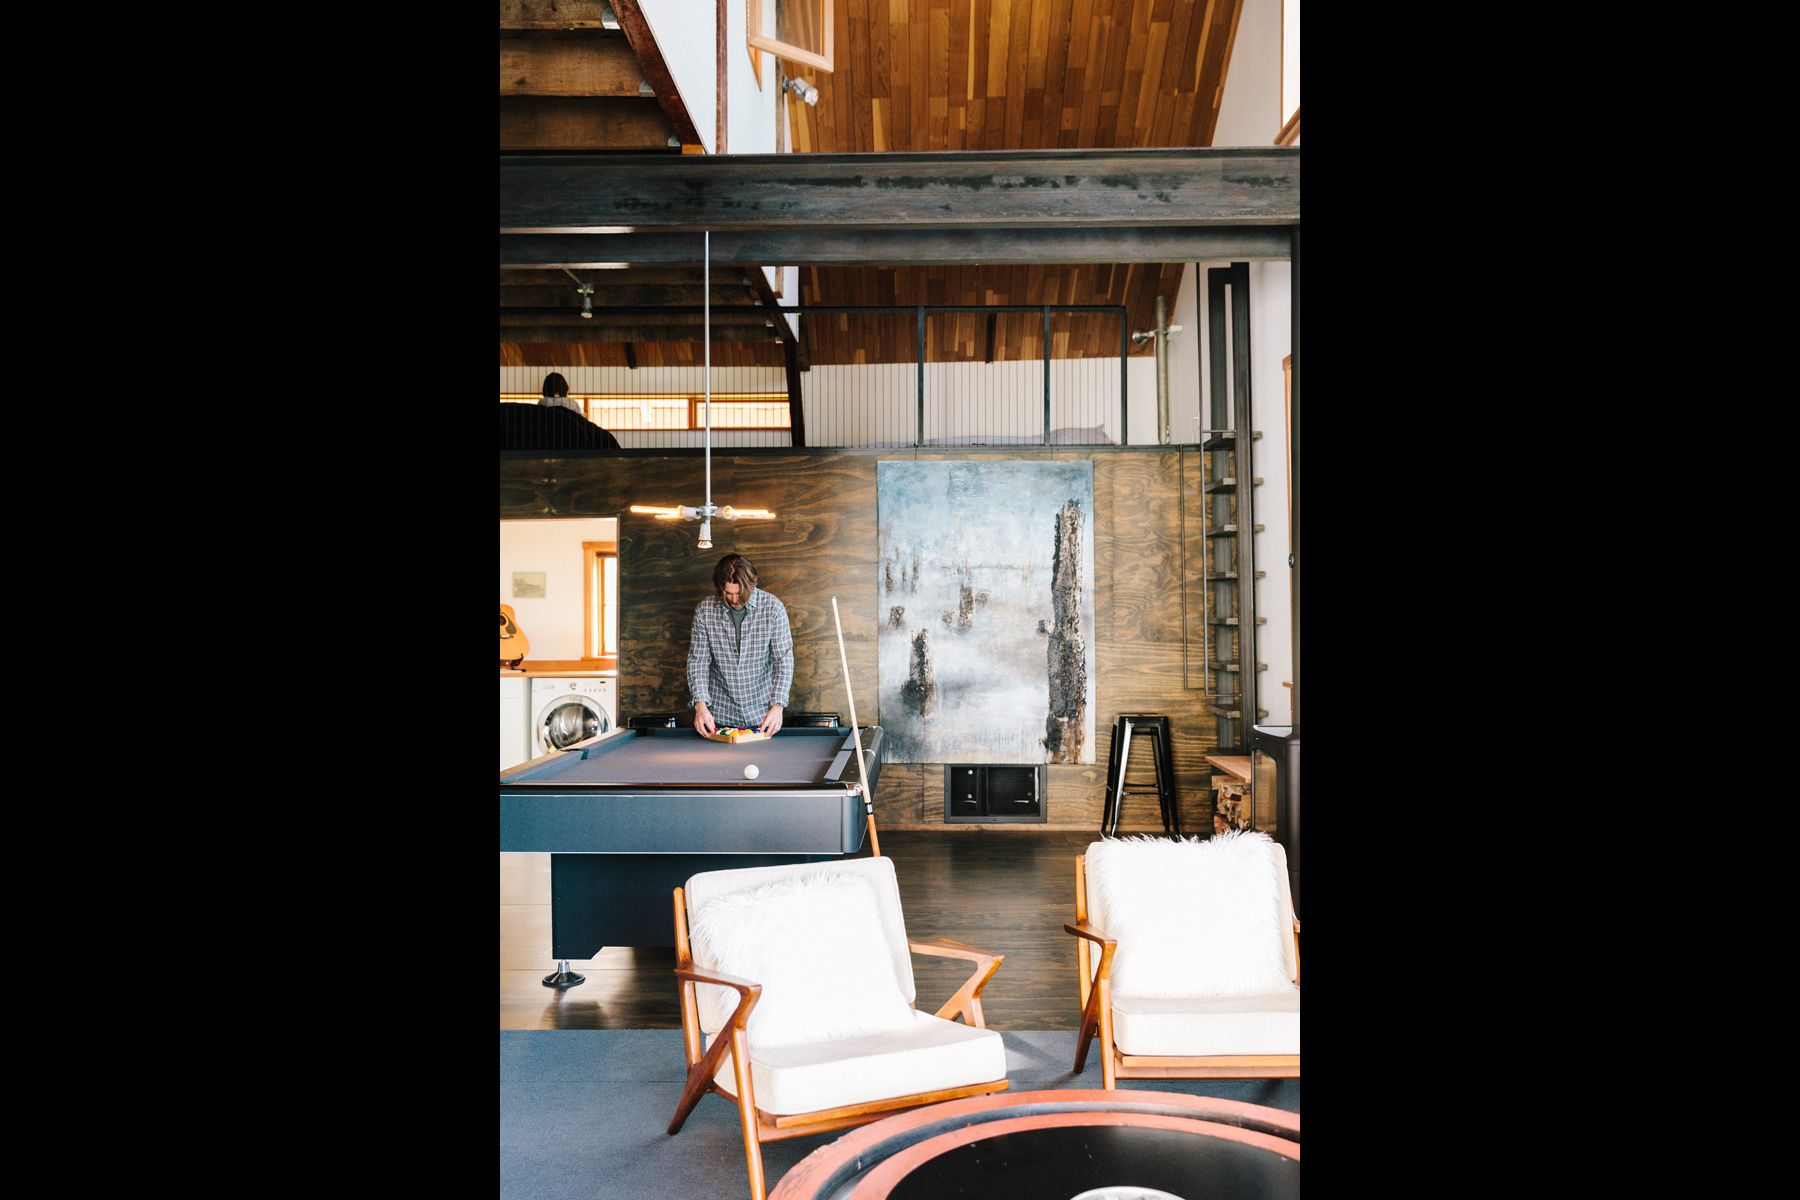 billards lounge, industrial chic, Portland architect, home design